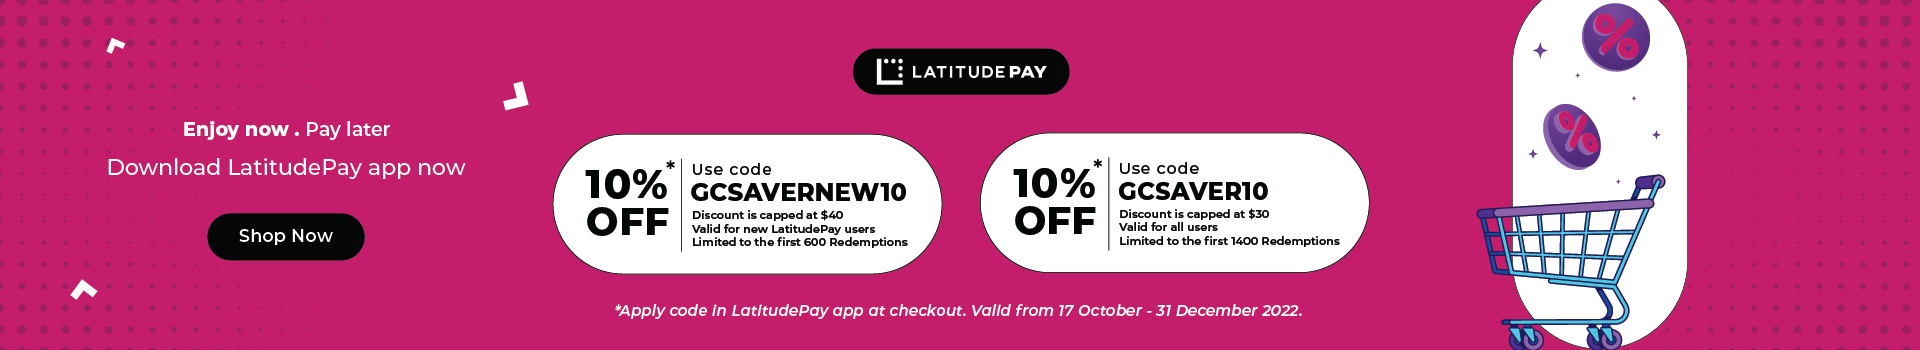 LatitudePay Promotion Oct - Dec